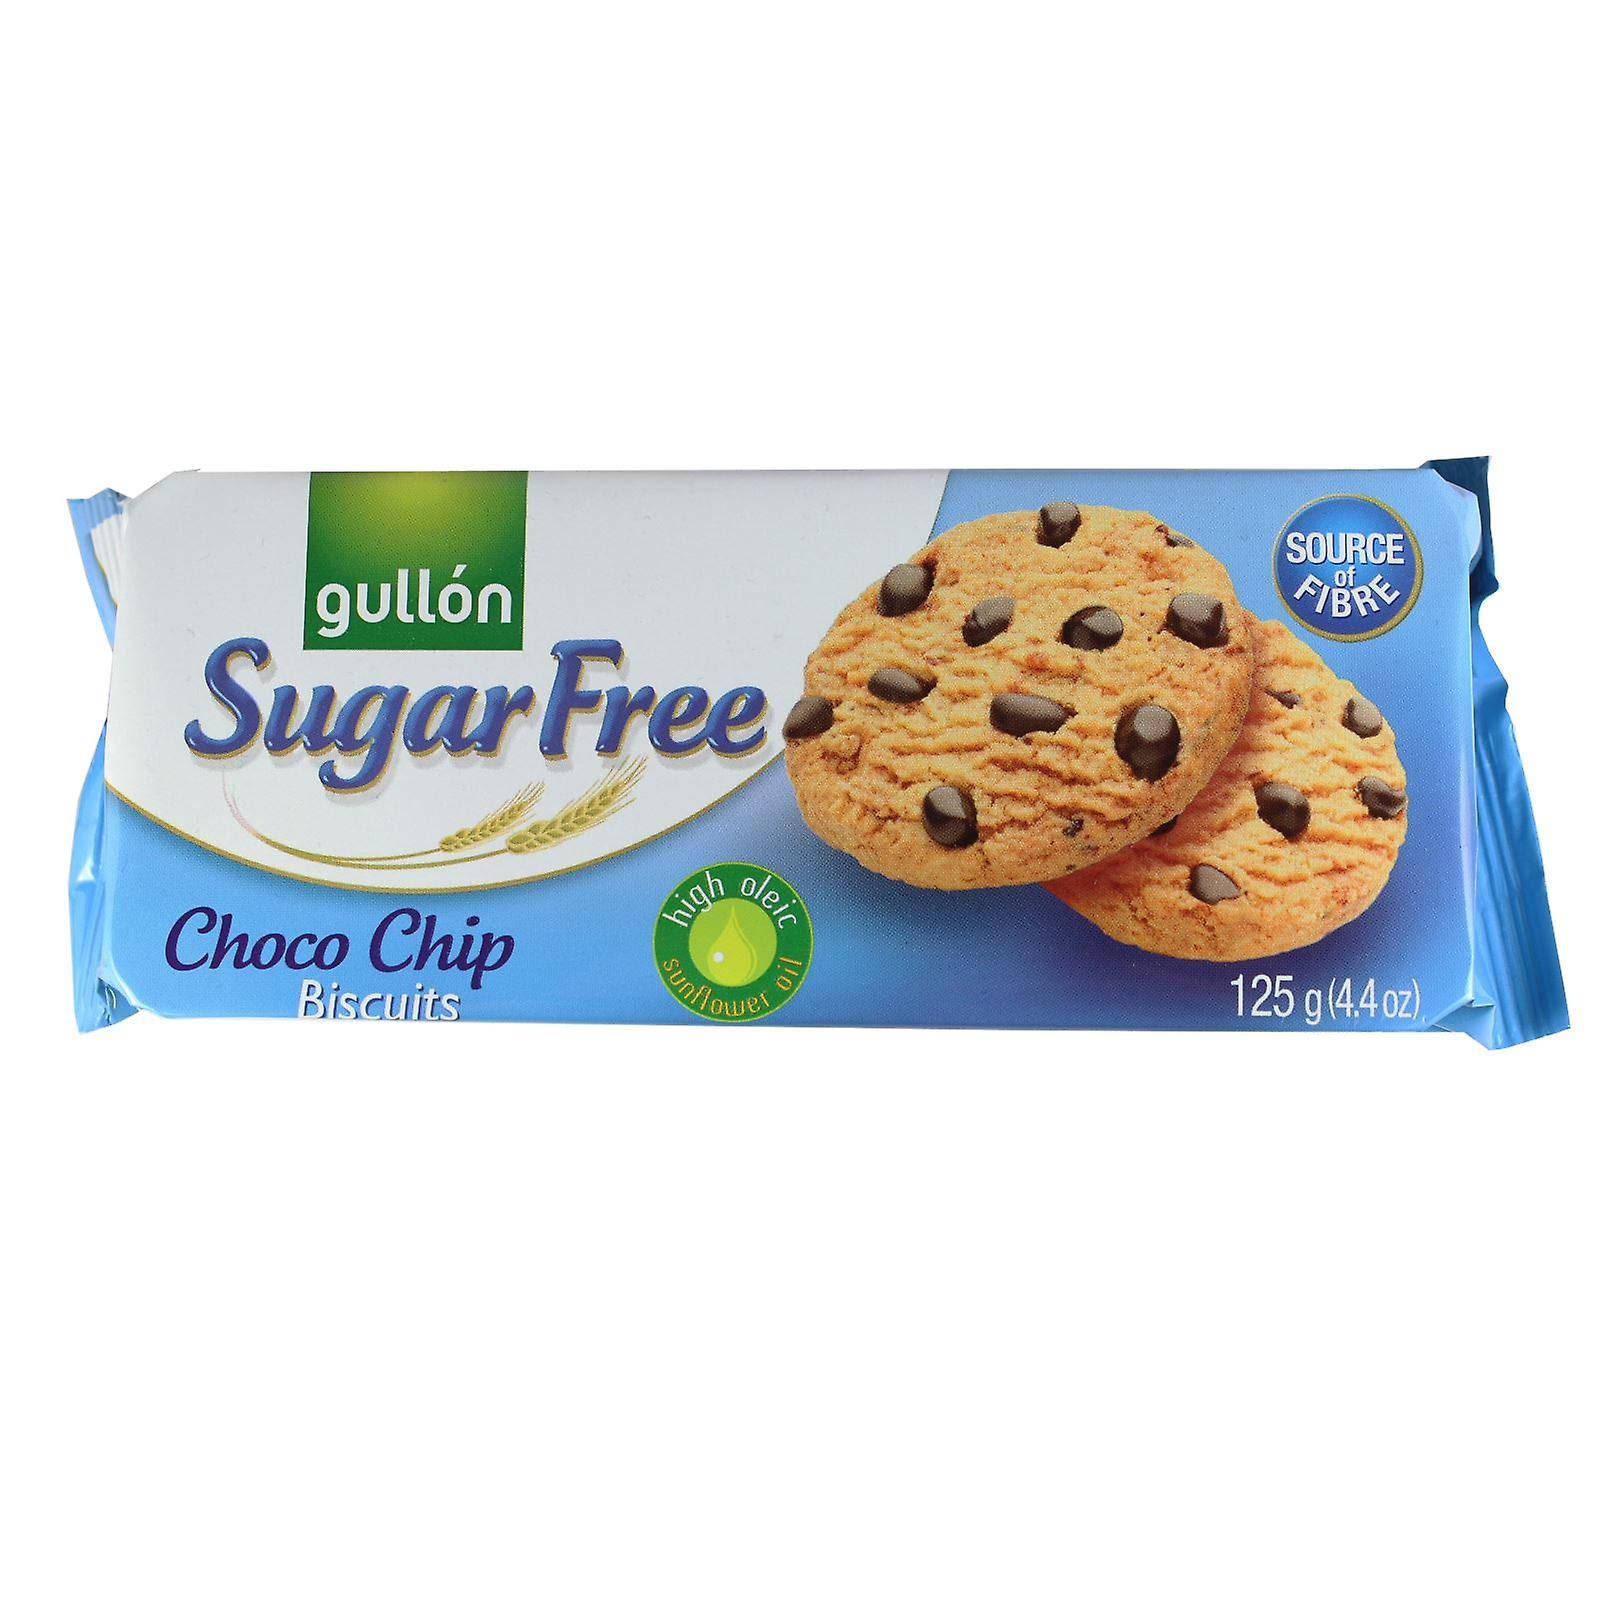 Gullon Sugar Free Bisquits - Choco Chip, 125g